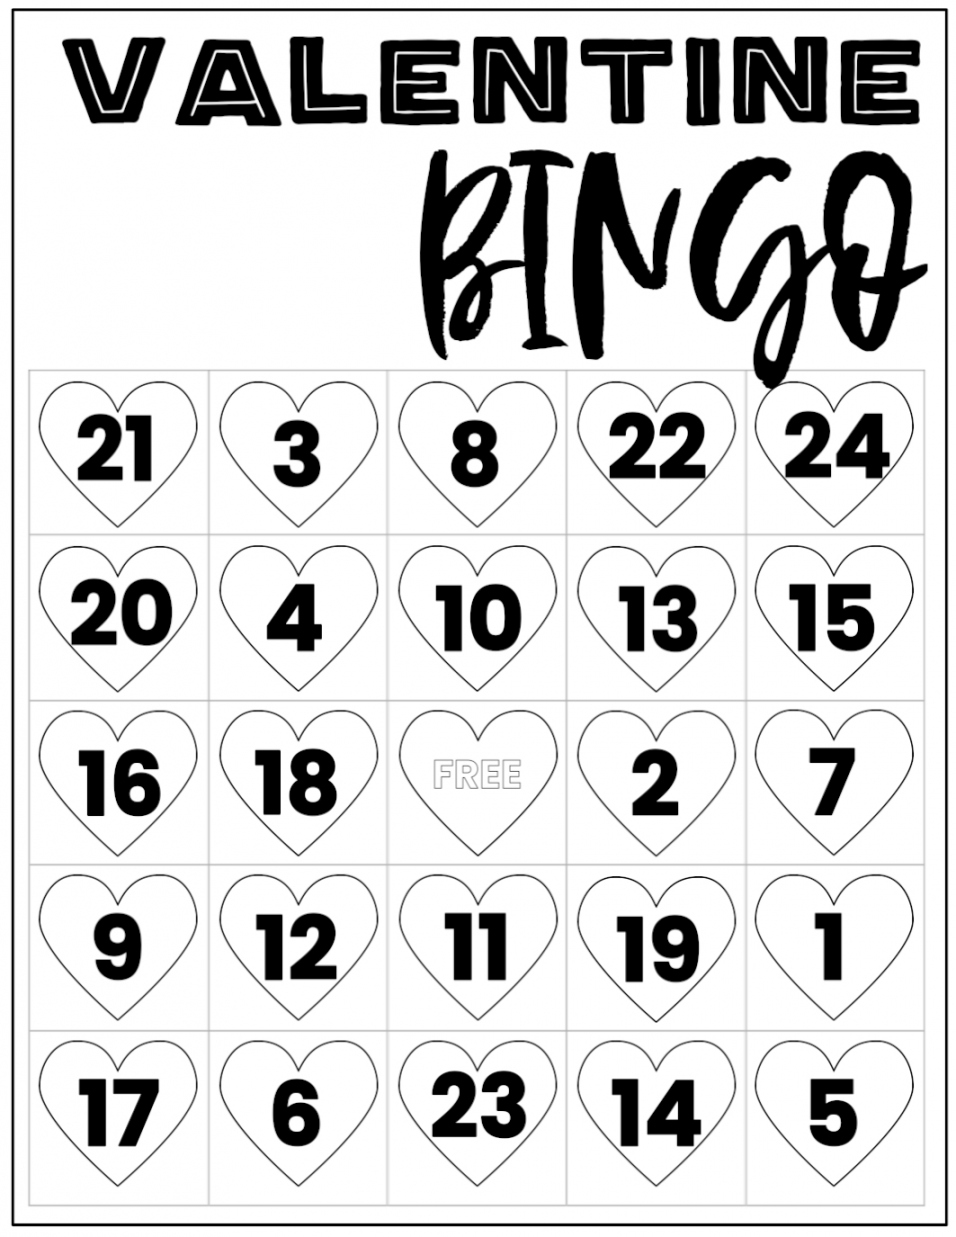 Free Valentine Bingo Printable Cards - Paper Trail Design - FREE Printables - 24 Valentine Bingo Cards Free Printable